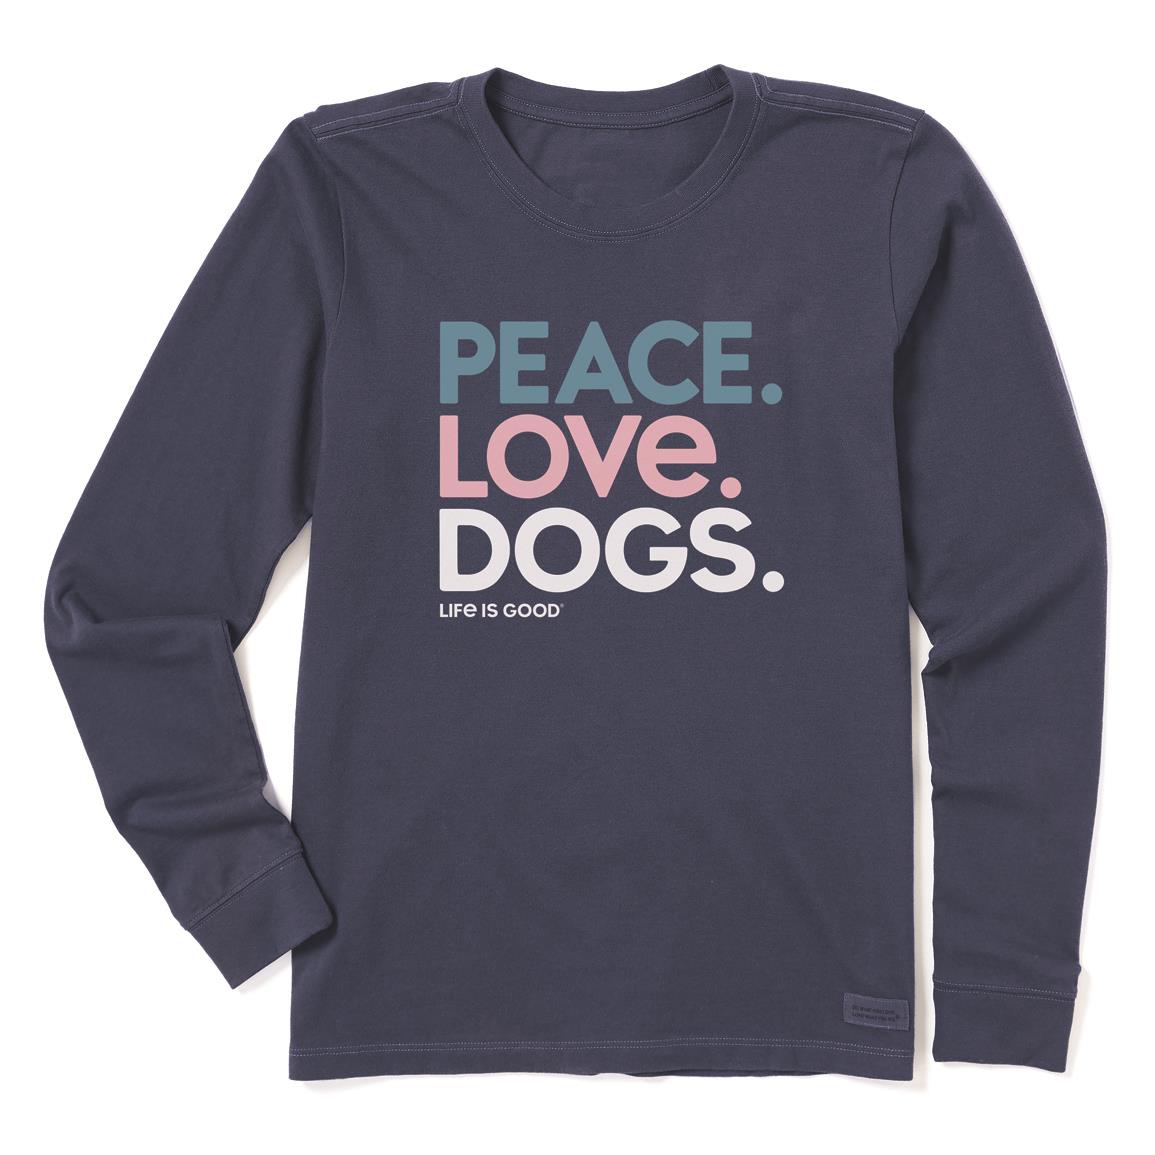 Life is Good Women's Peace Love Dogs Long Sleeve Crusher Shirt, Darkest Blue